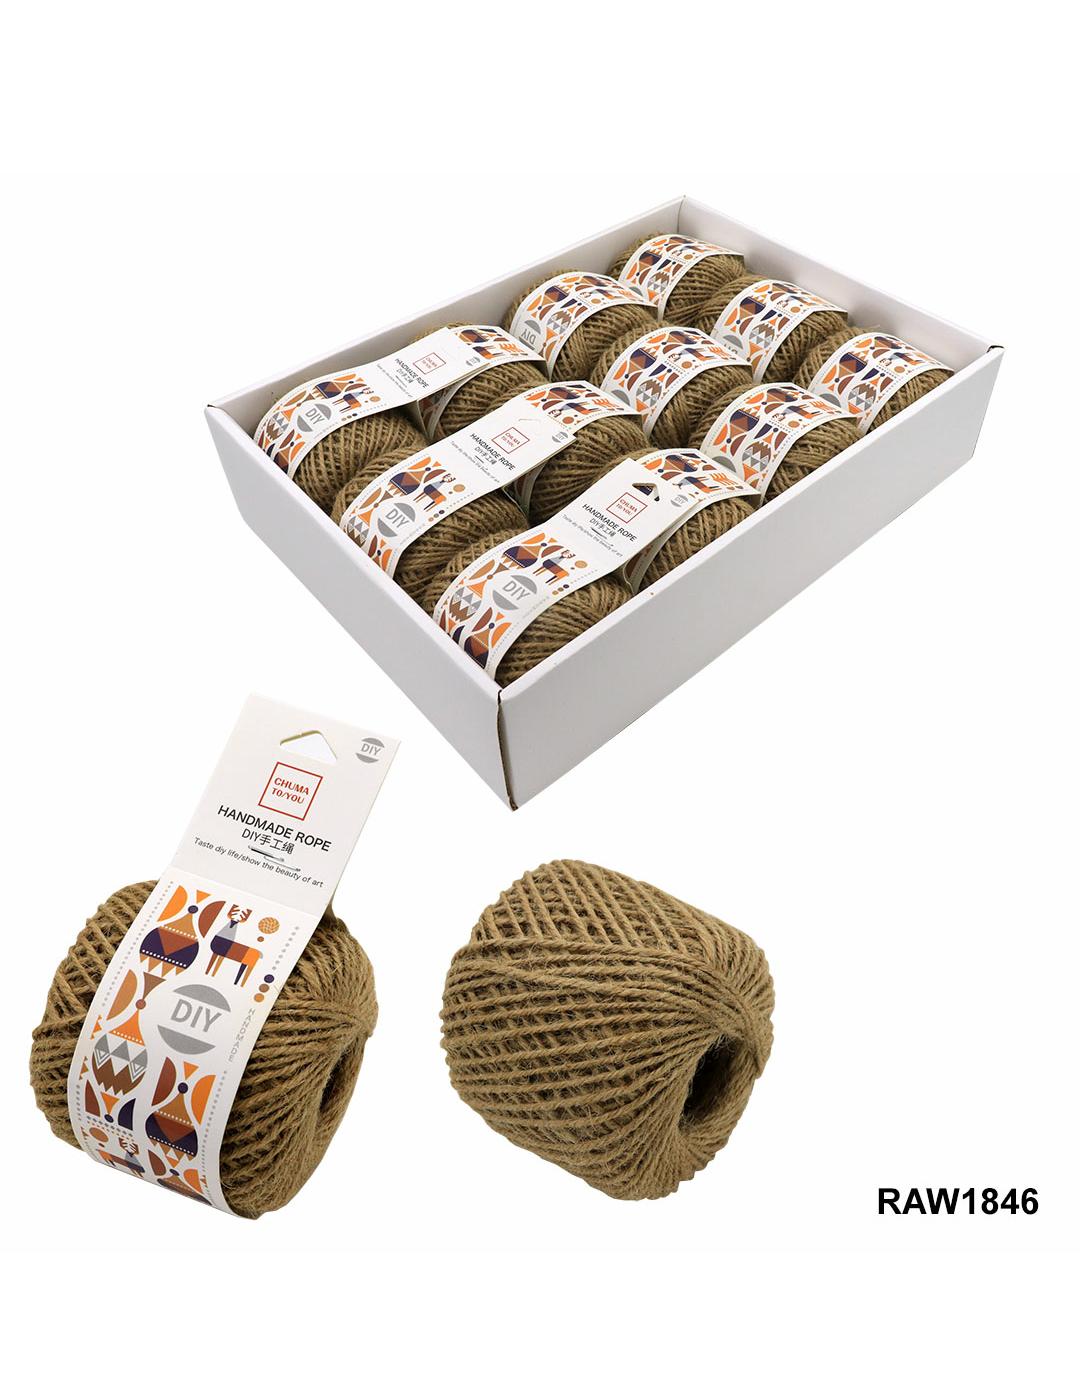 Diy Handmade Rope Natural Raw1846 | INKARTO